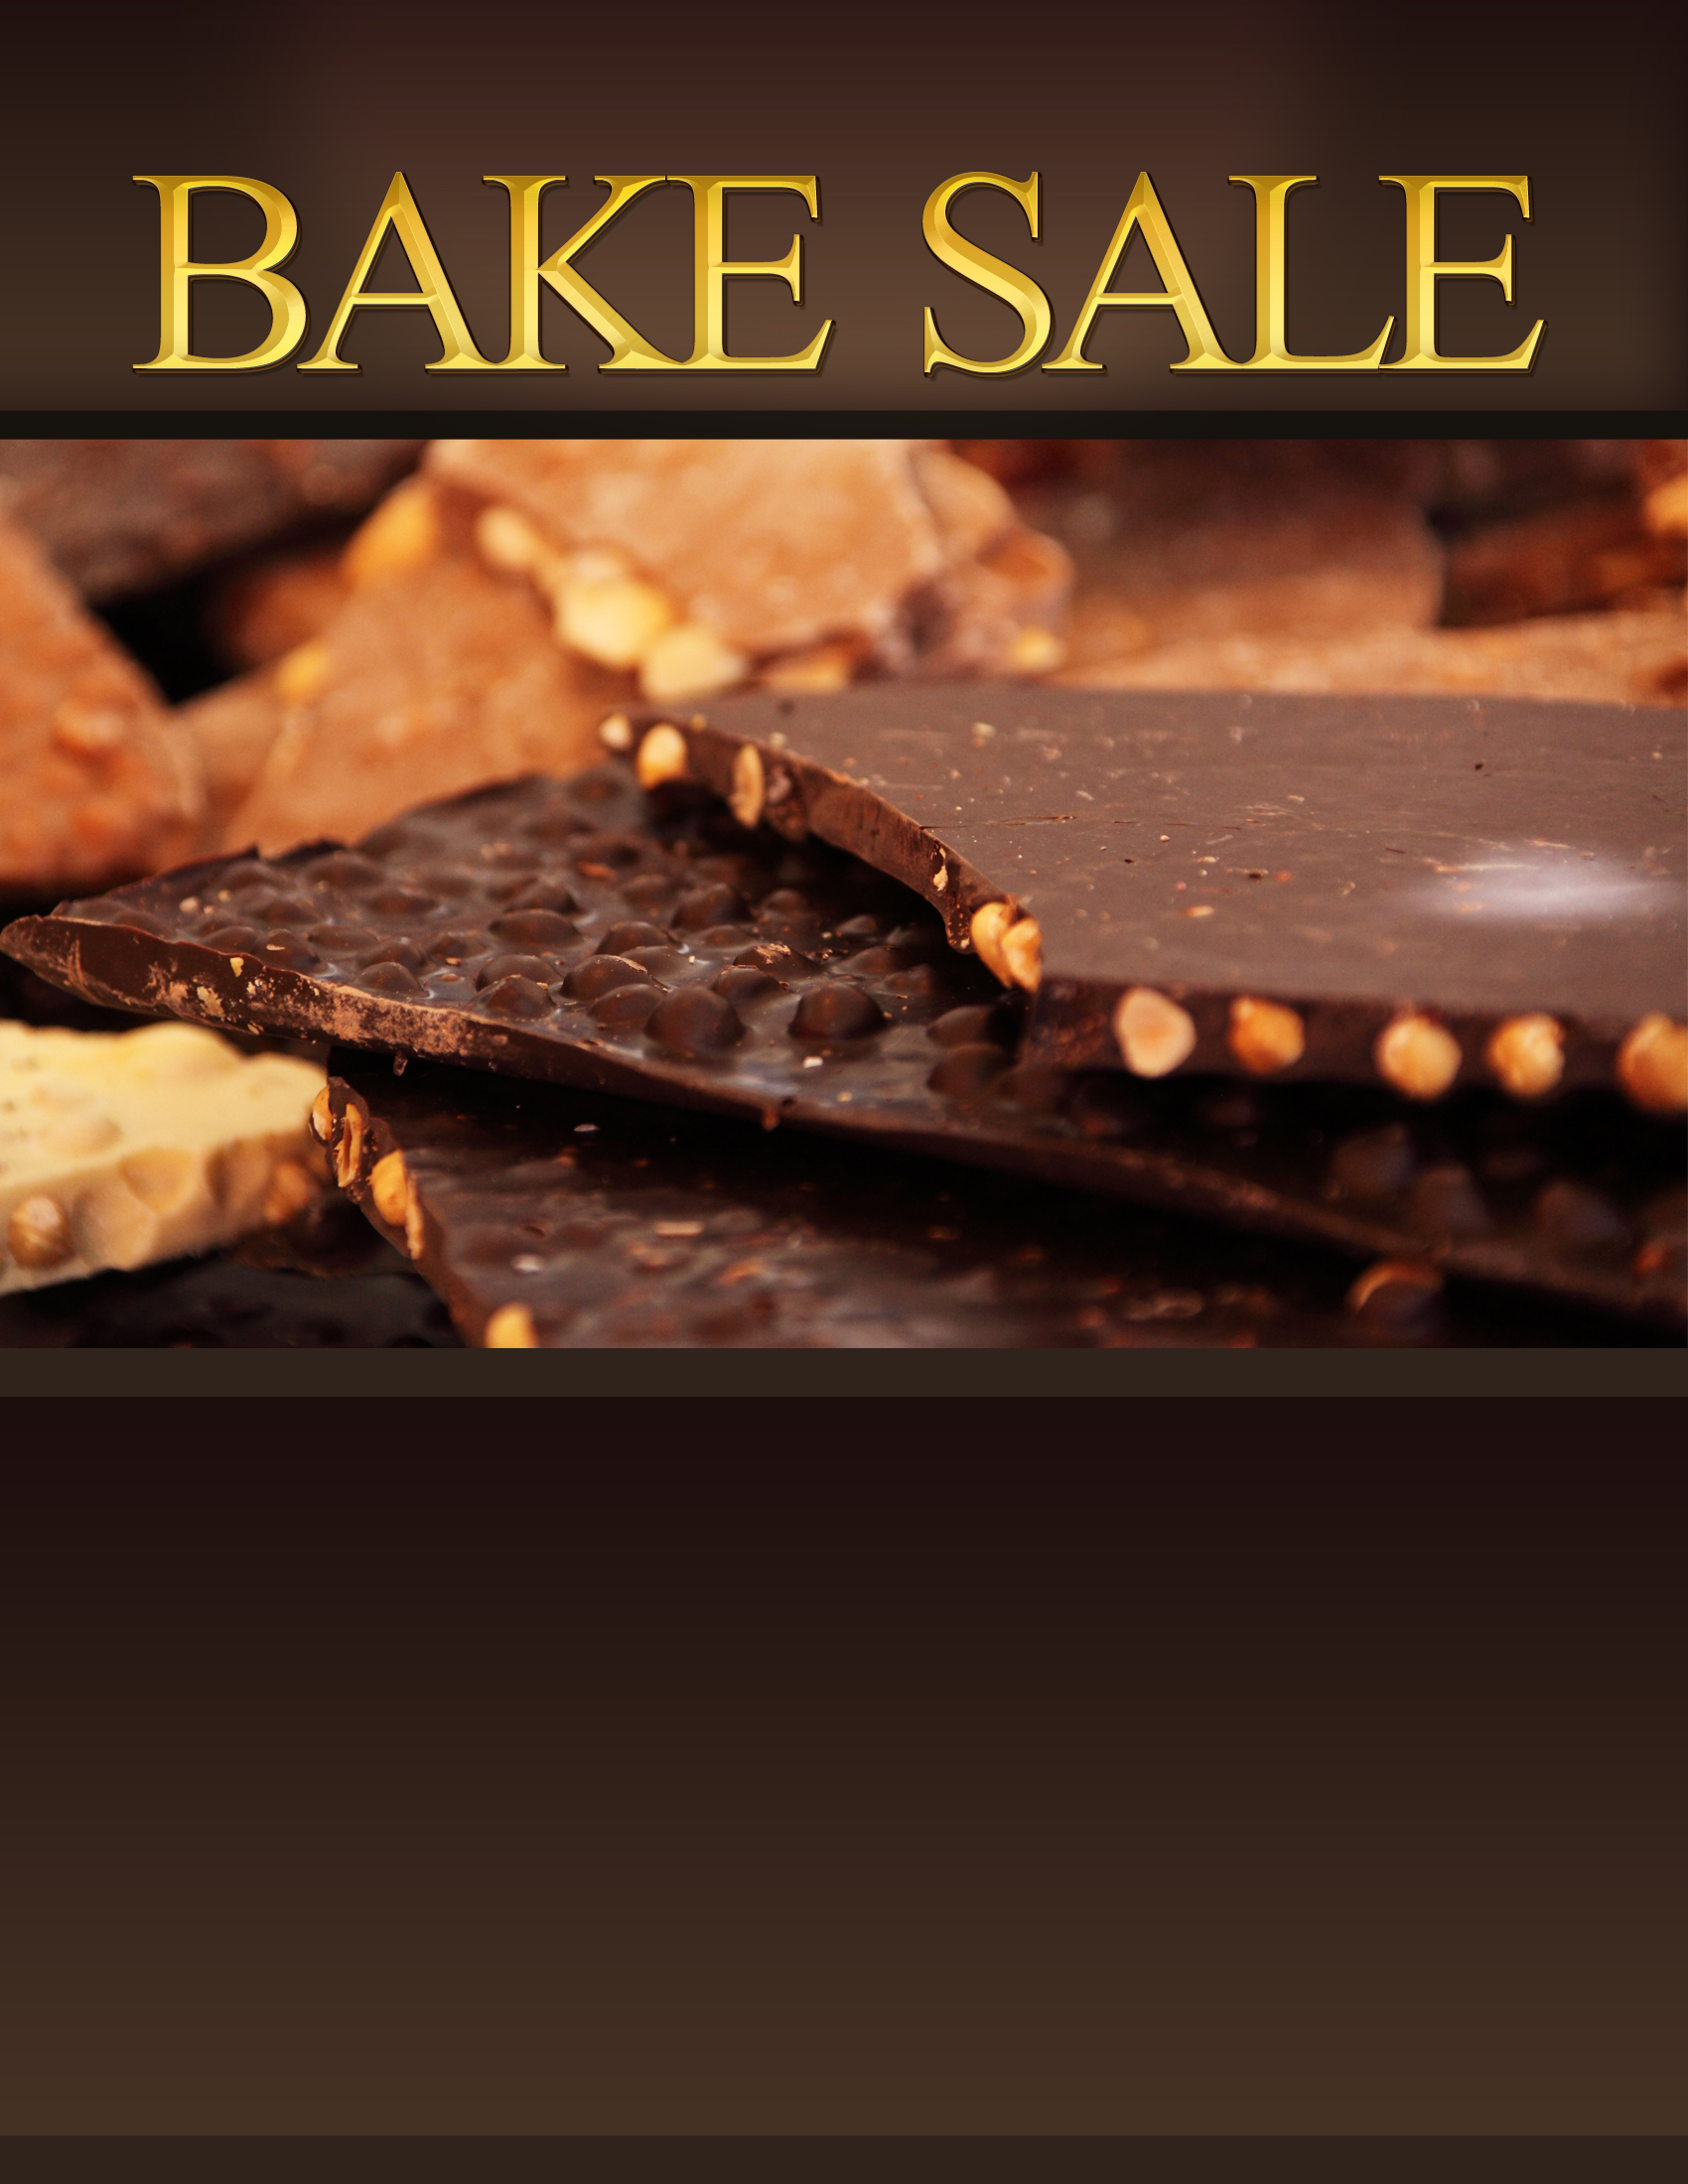 Chocolate Bake Sale Flyer Template Bake Sale Flyers Free Flyer Designs